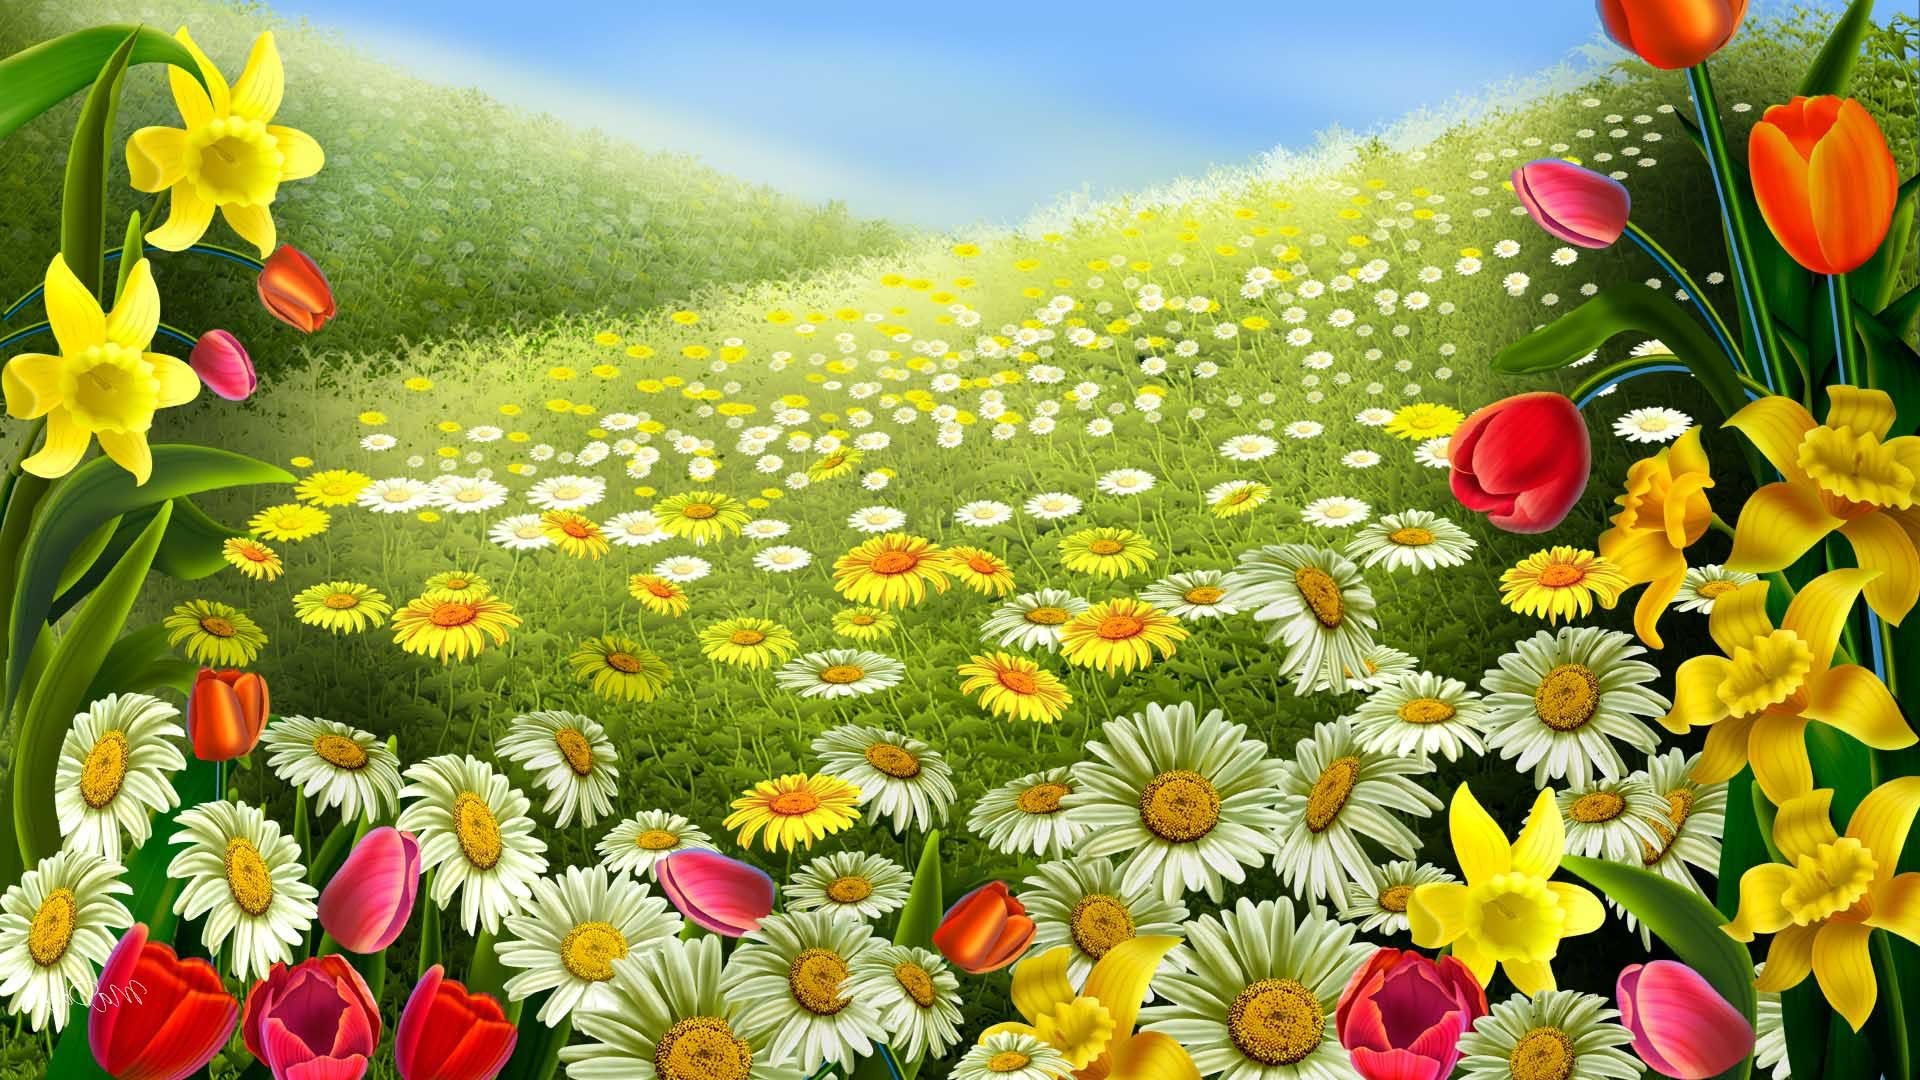 1920x1080 Colorful flowers Spring desktop backgrounds | Wallpaperloves